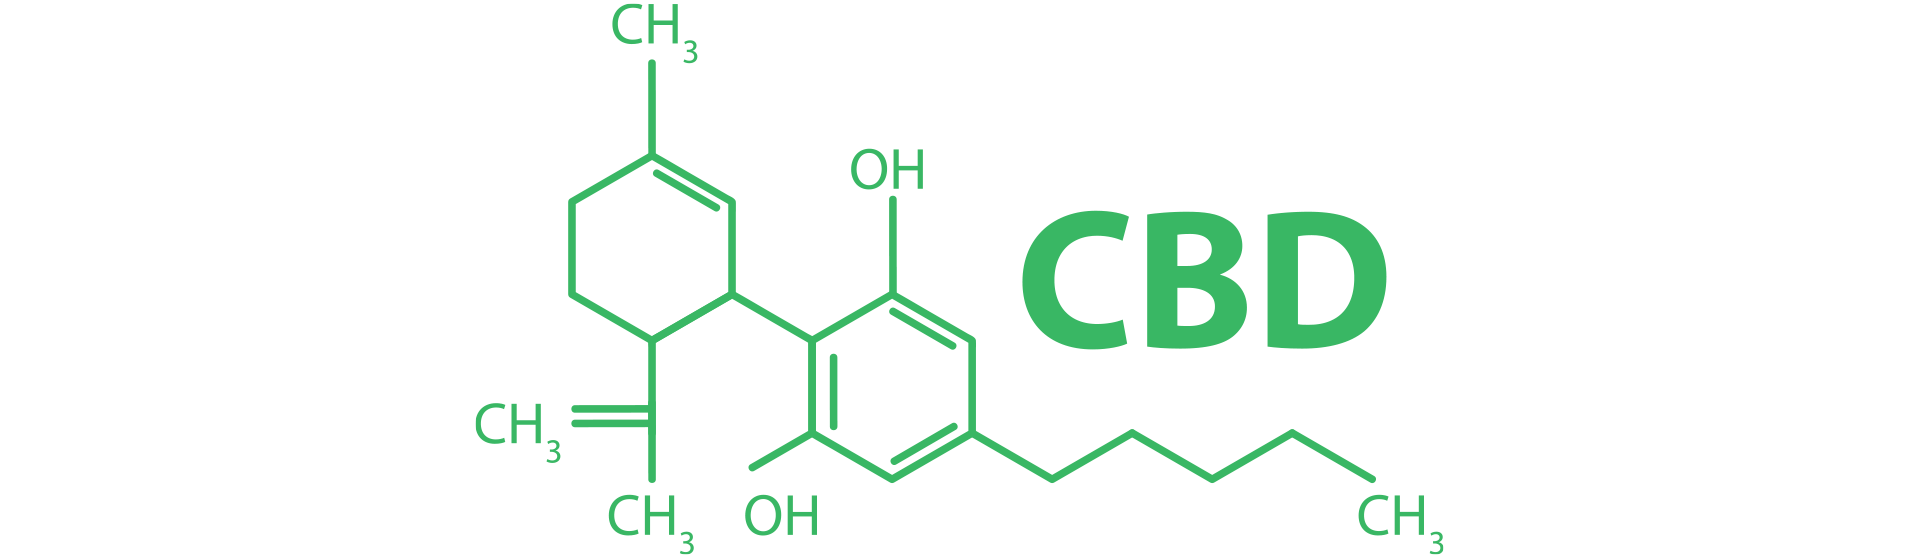 chemical-formula-of-CBD